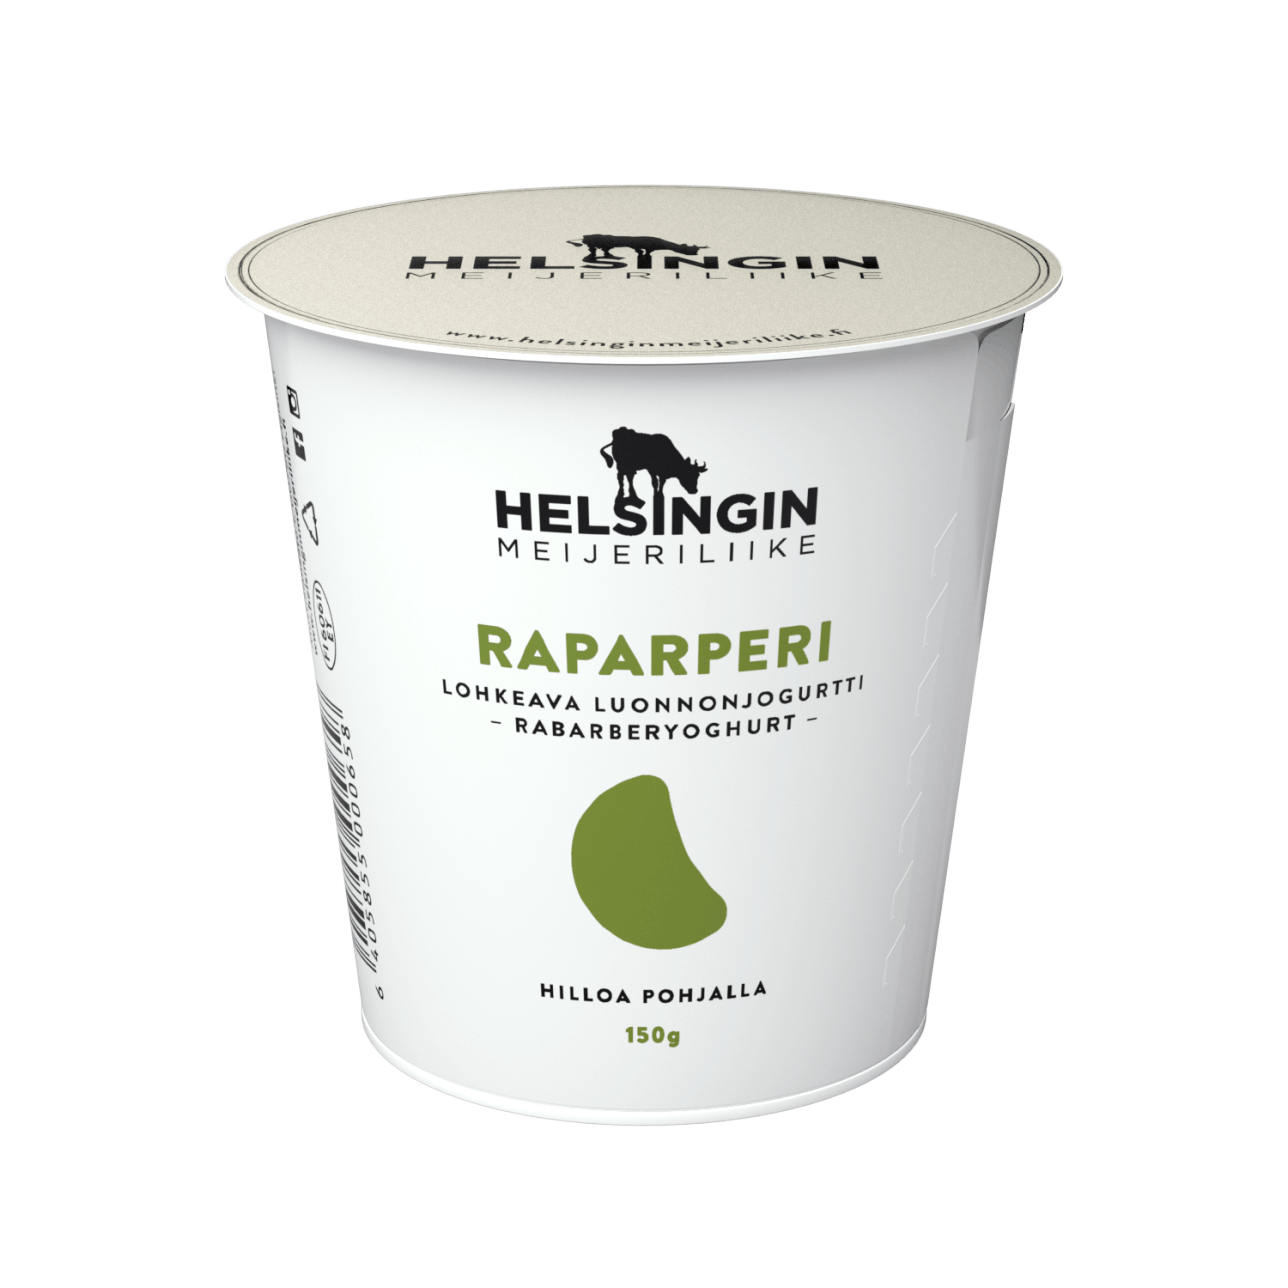 Raparperi jogurtti, lohkeava luonnonjogurtti - hilloa pohjalla.